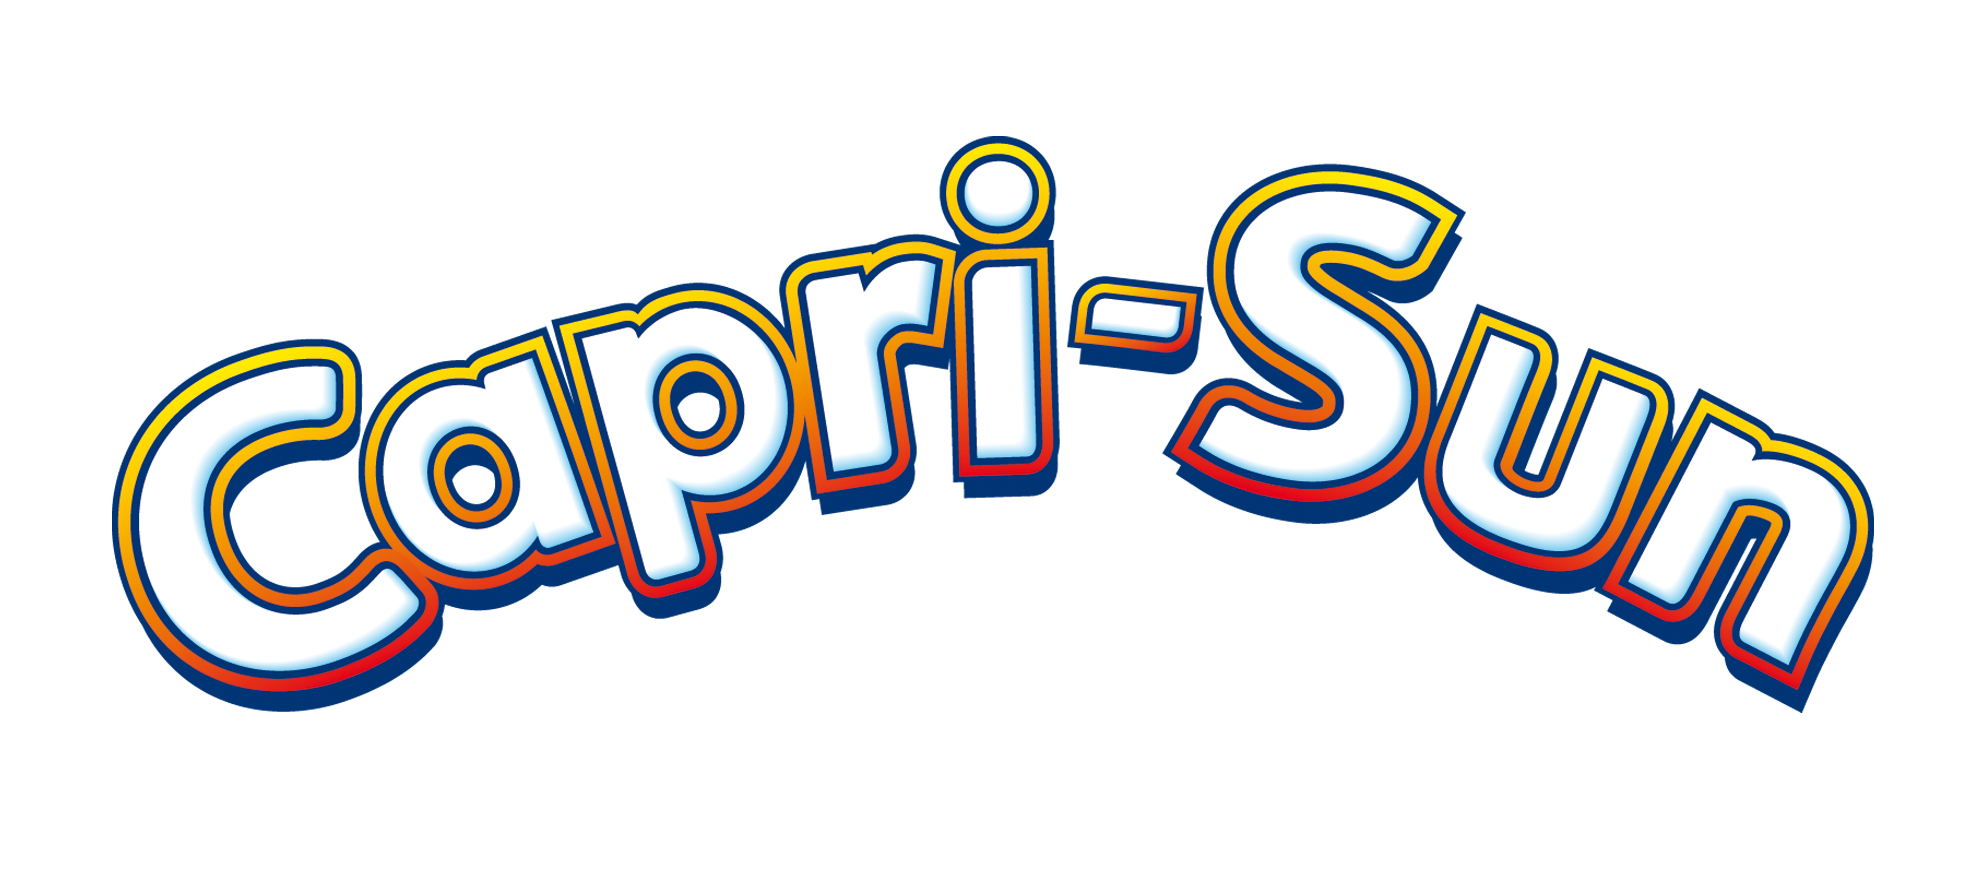 Capri-sun_logo